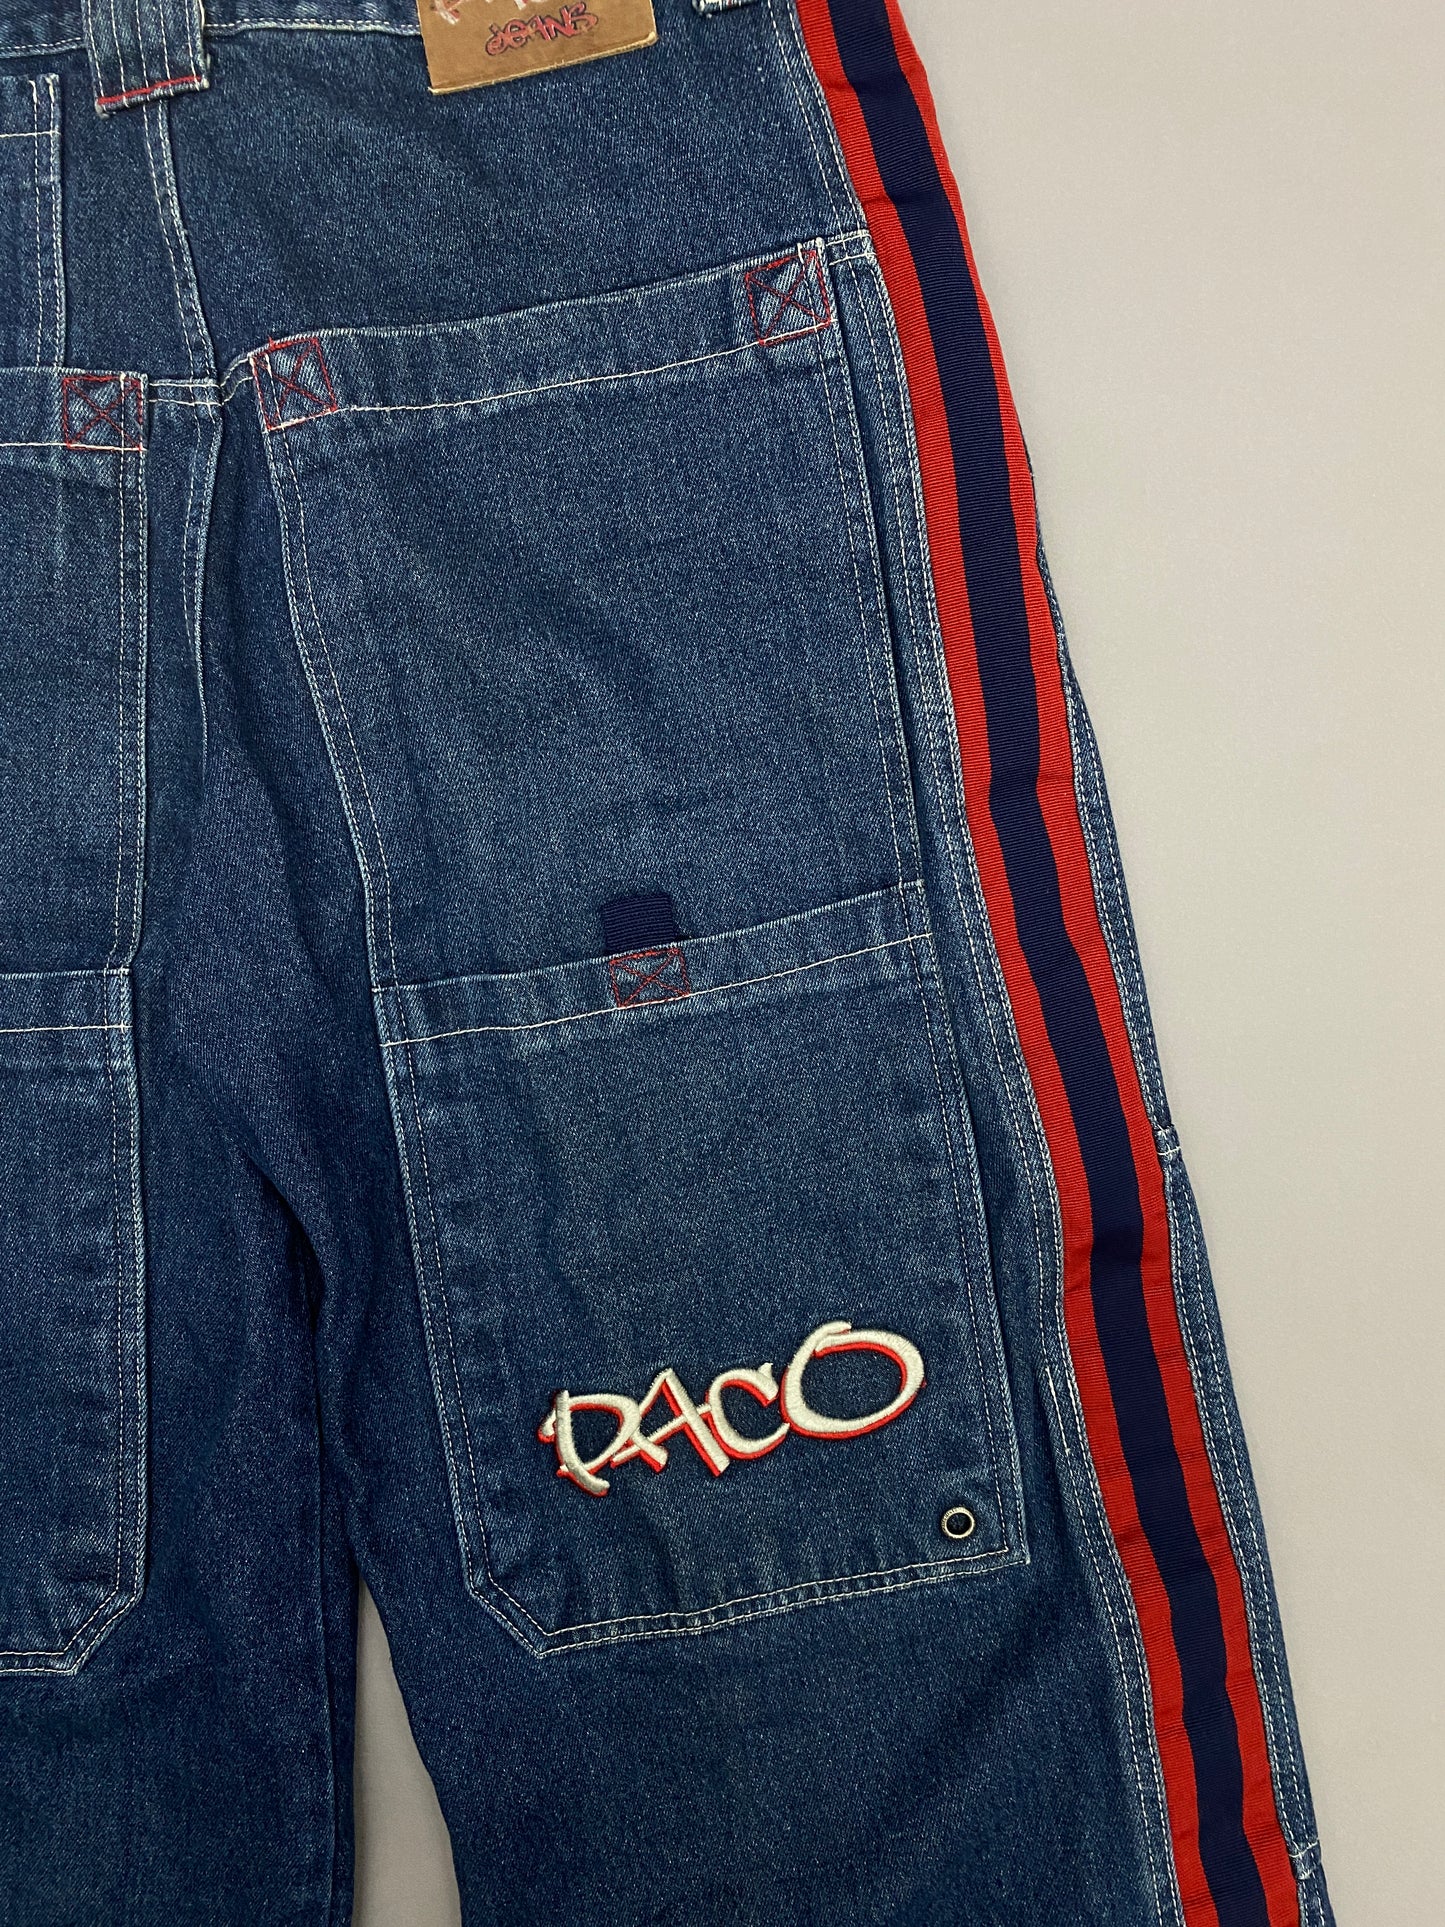 Paco Vintage Wide Jeans - 34